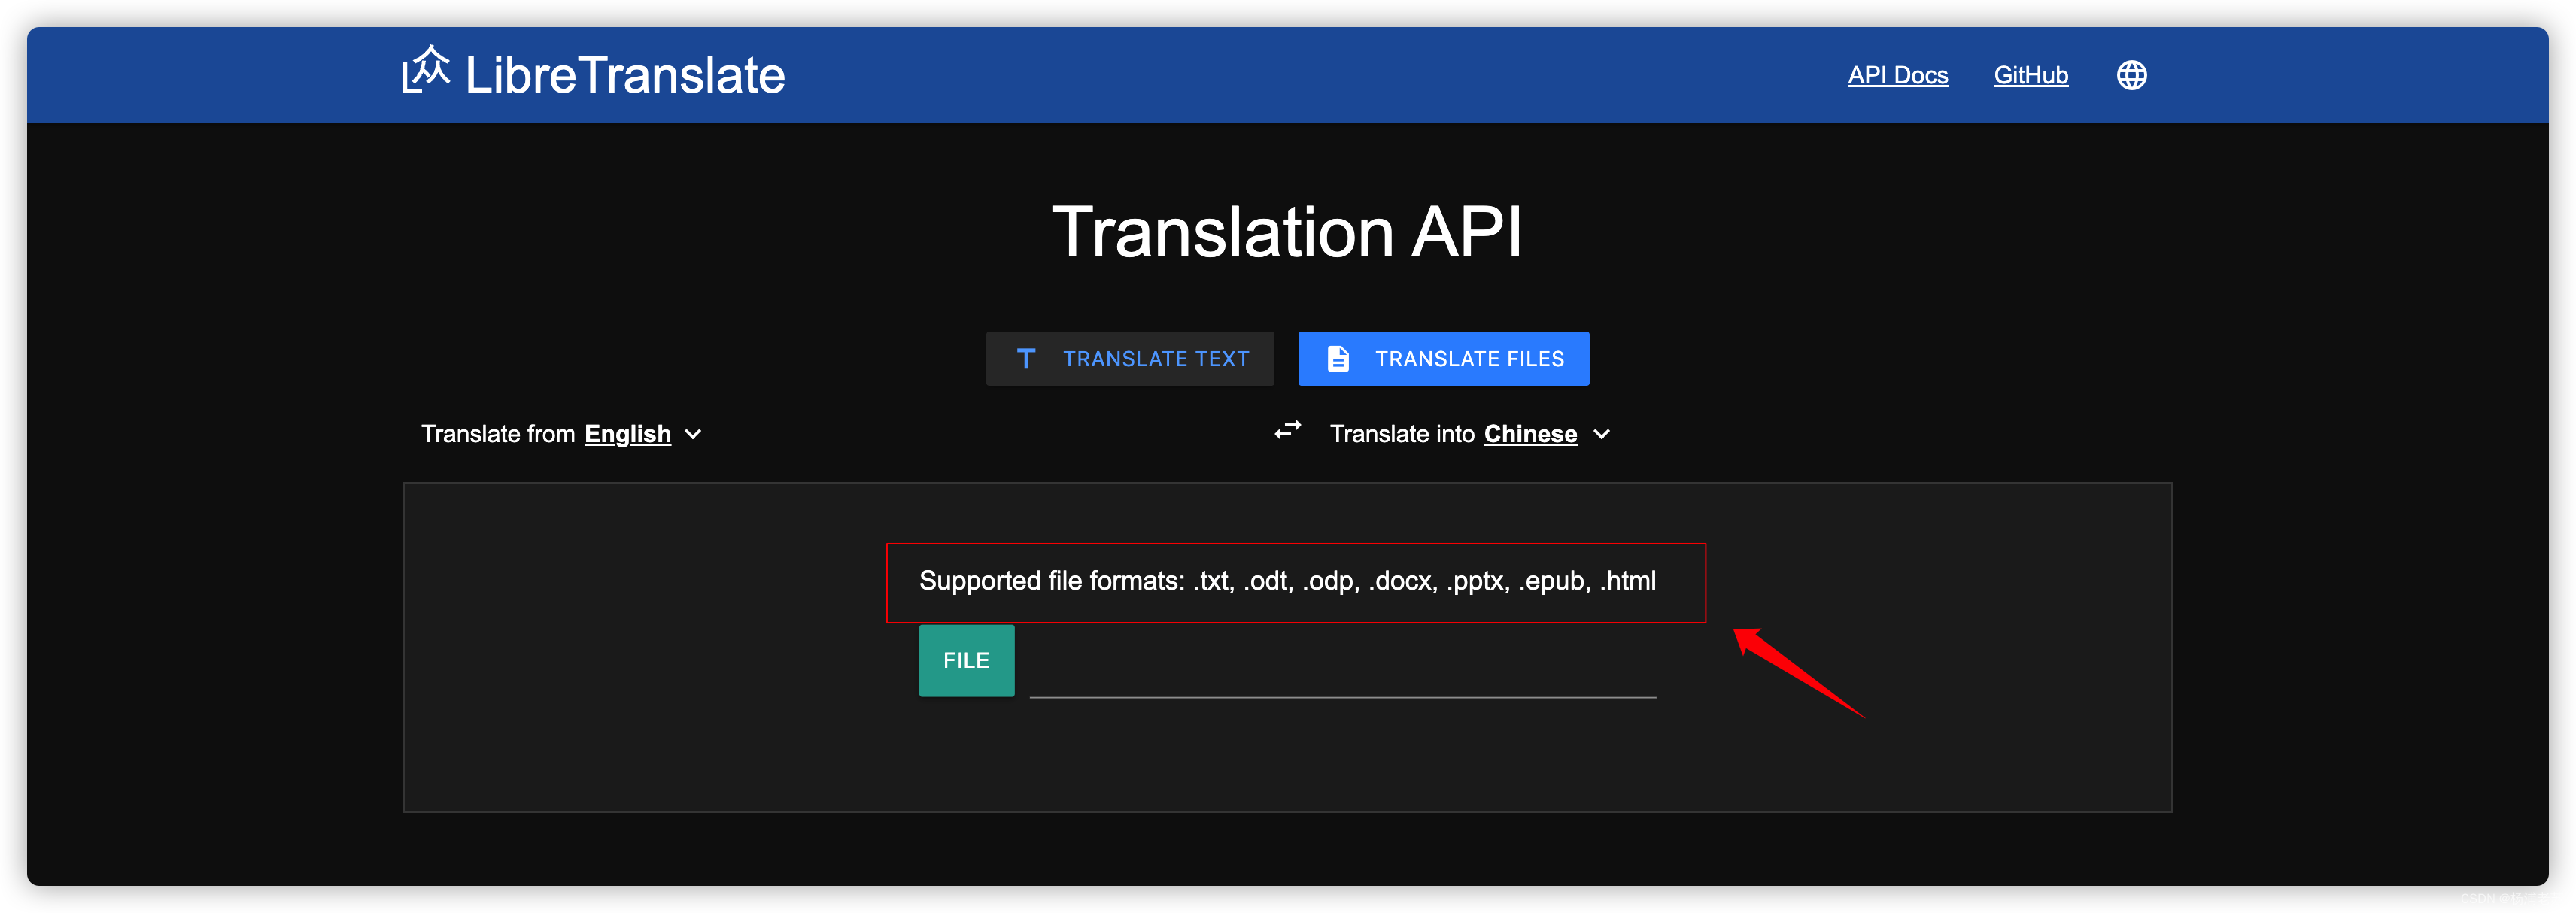 免费和开源的机器翻译软件LibreTranslate